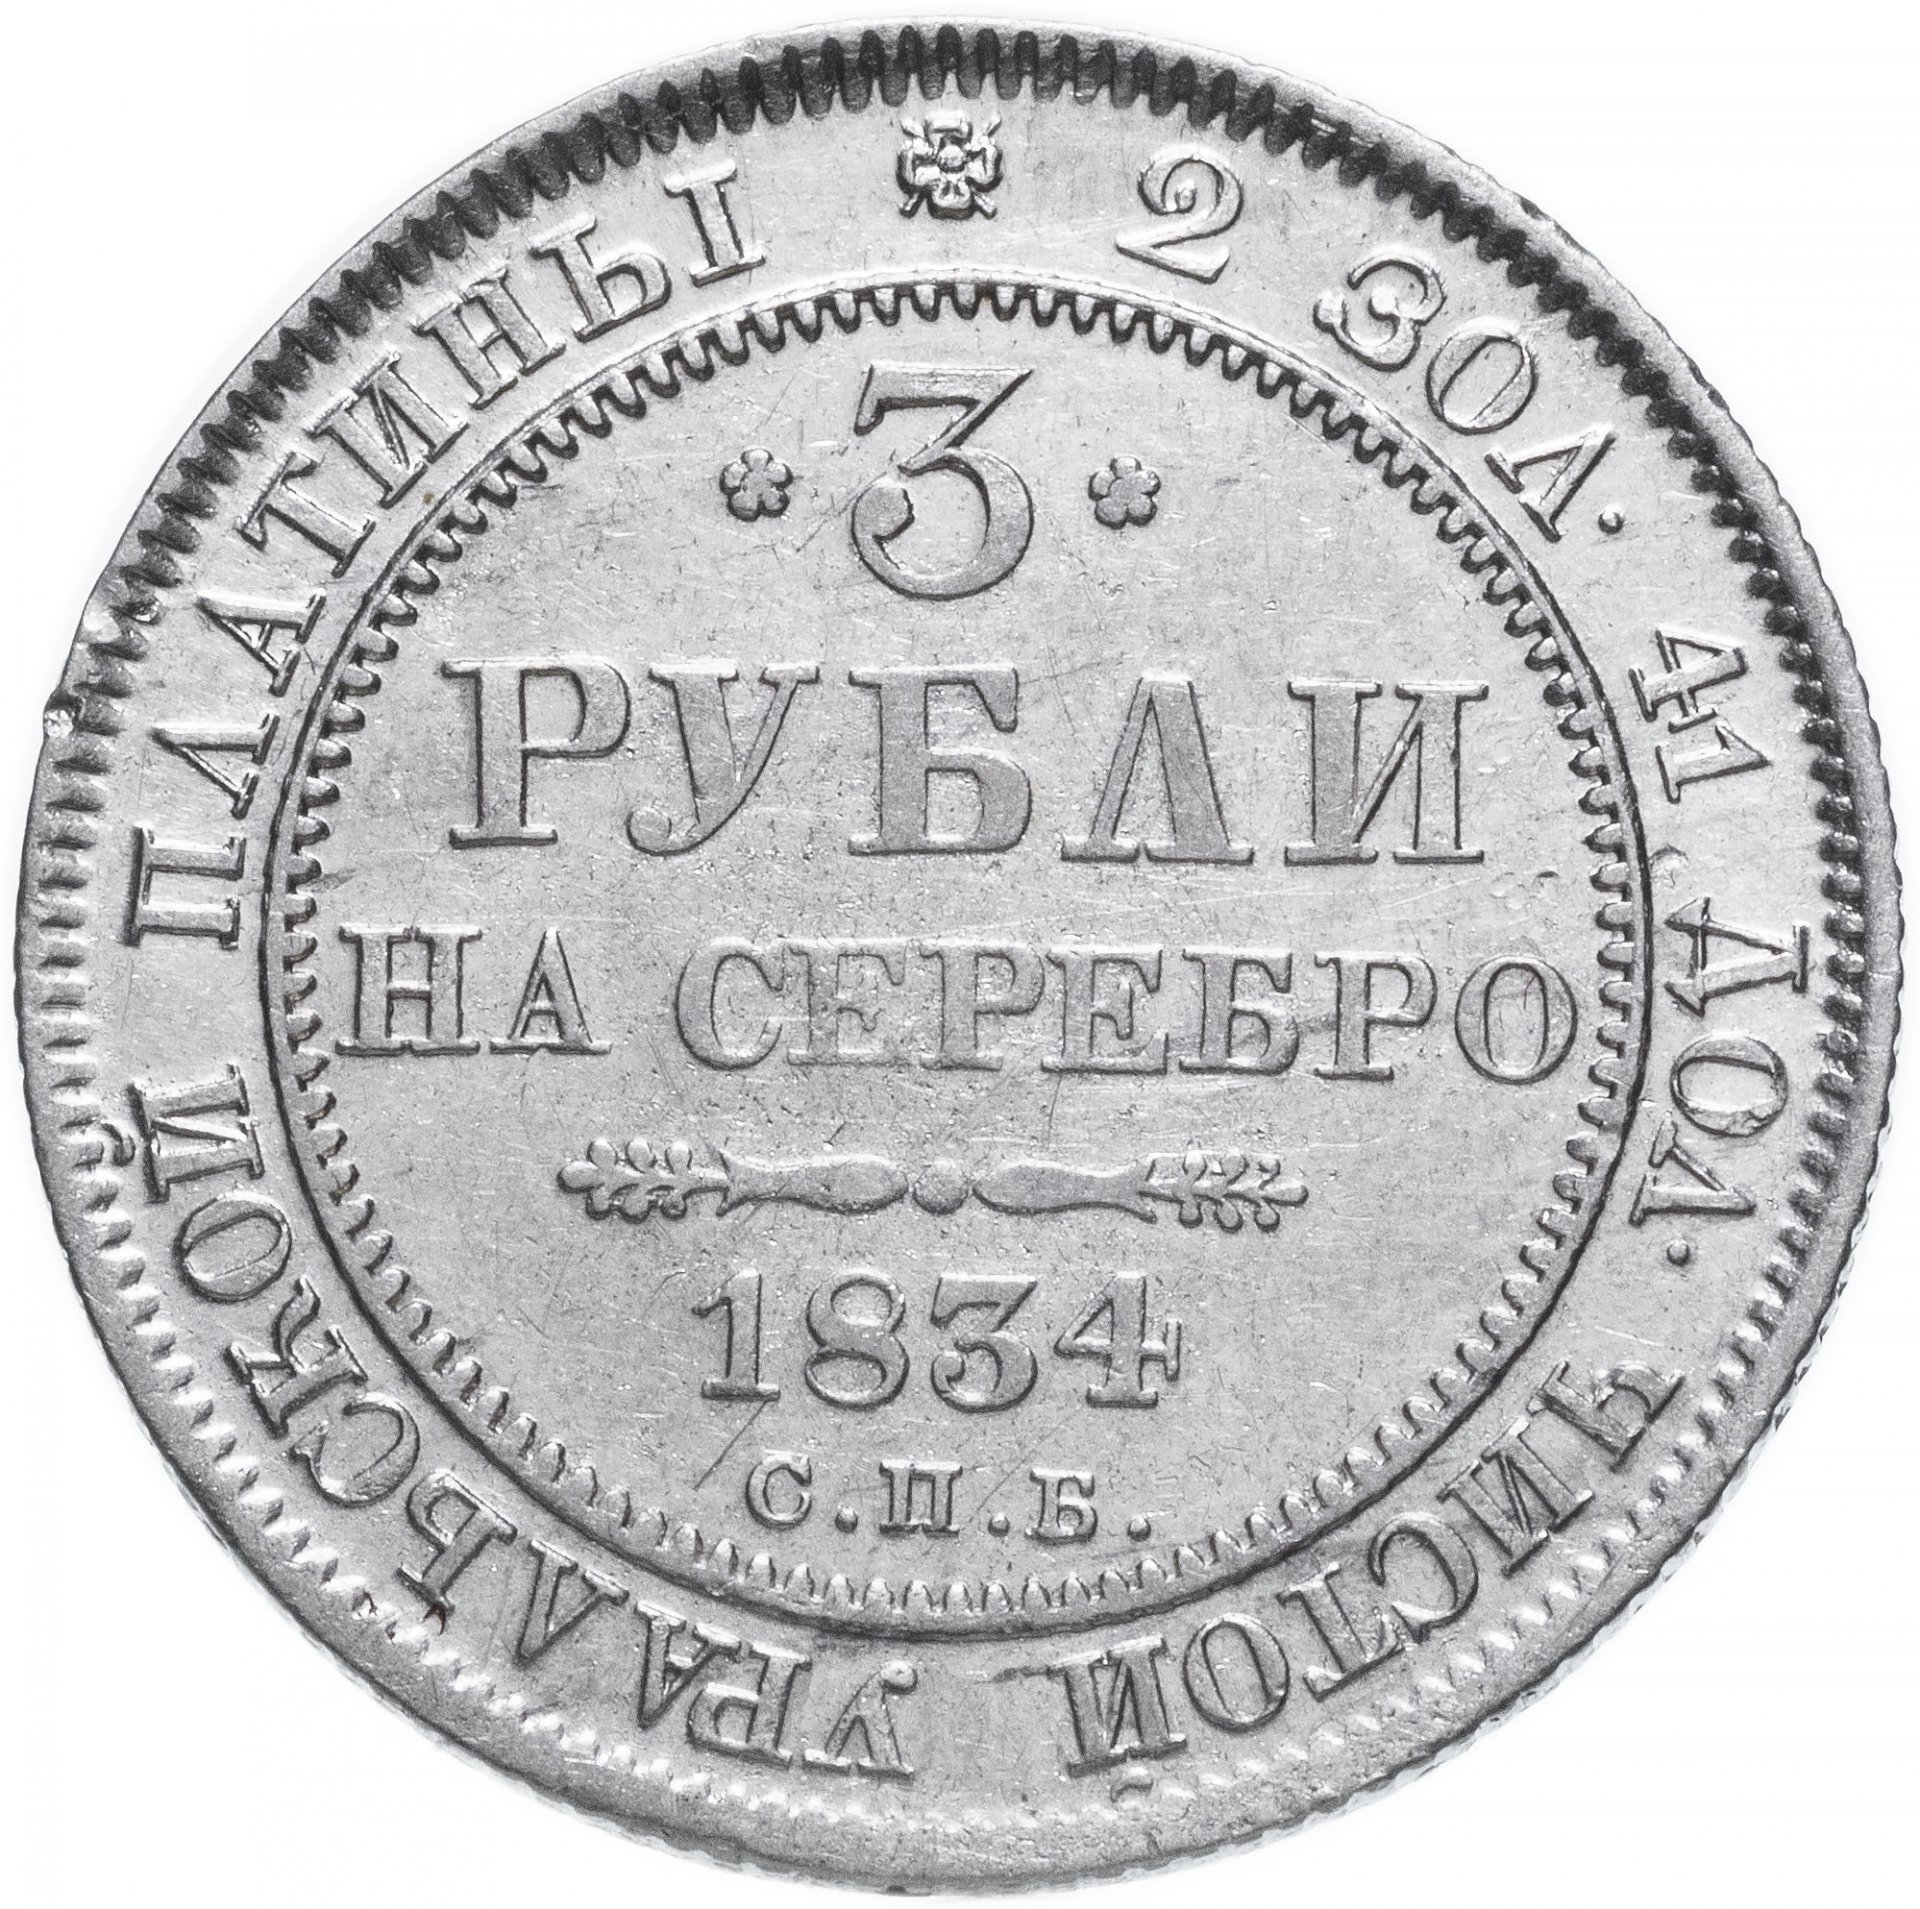 3 рубля урал. Монета рубль 1834. Монета номиналом 3 рубля. Платиновые монеты 3.6.12 рублей. Монета руб 1834 года.